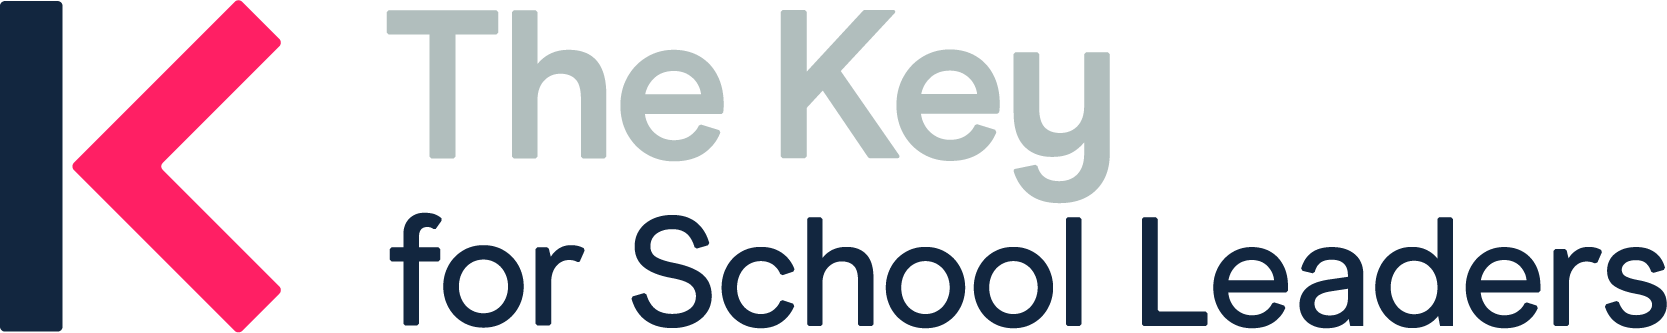 The Key For School Leaders logo